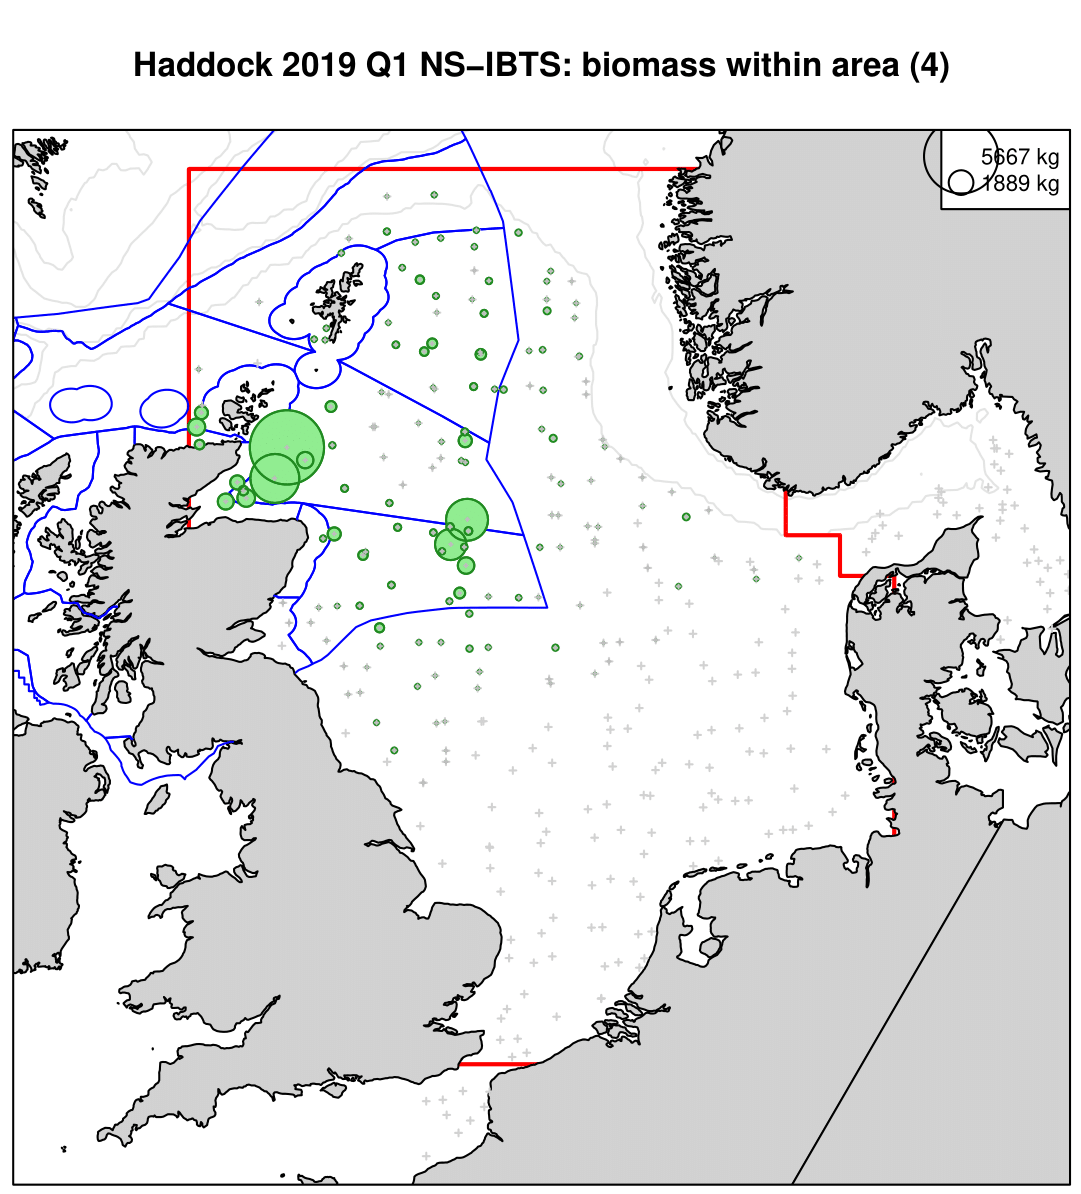 Haddock 2019 Q1 NS-IBTS: biomass within area (4)